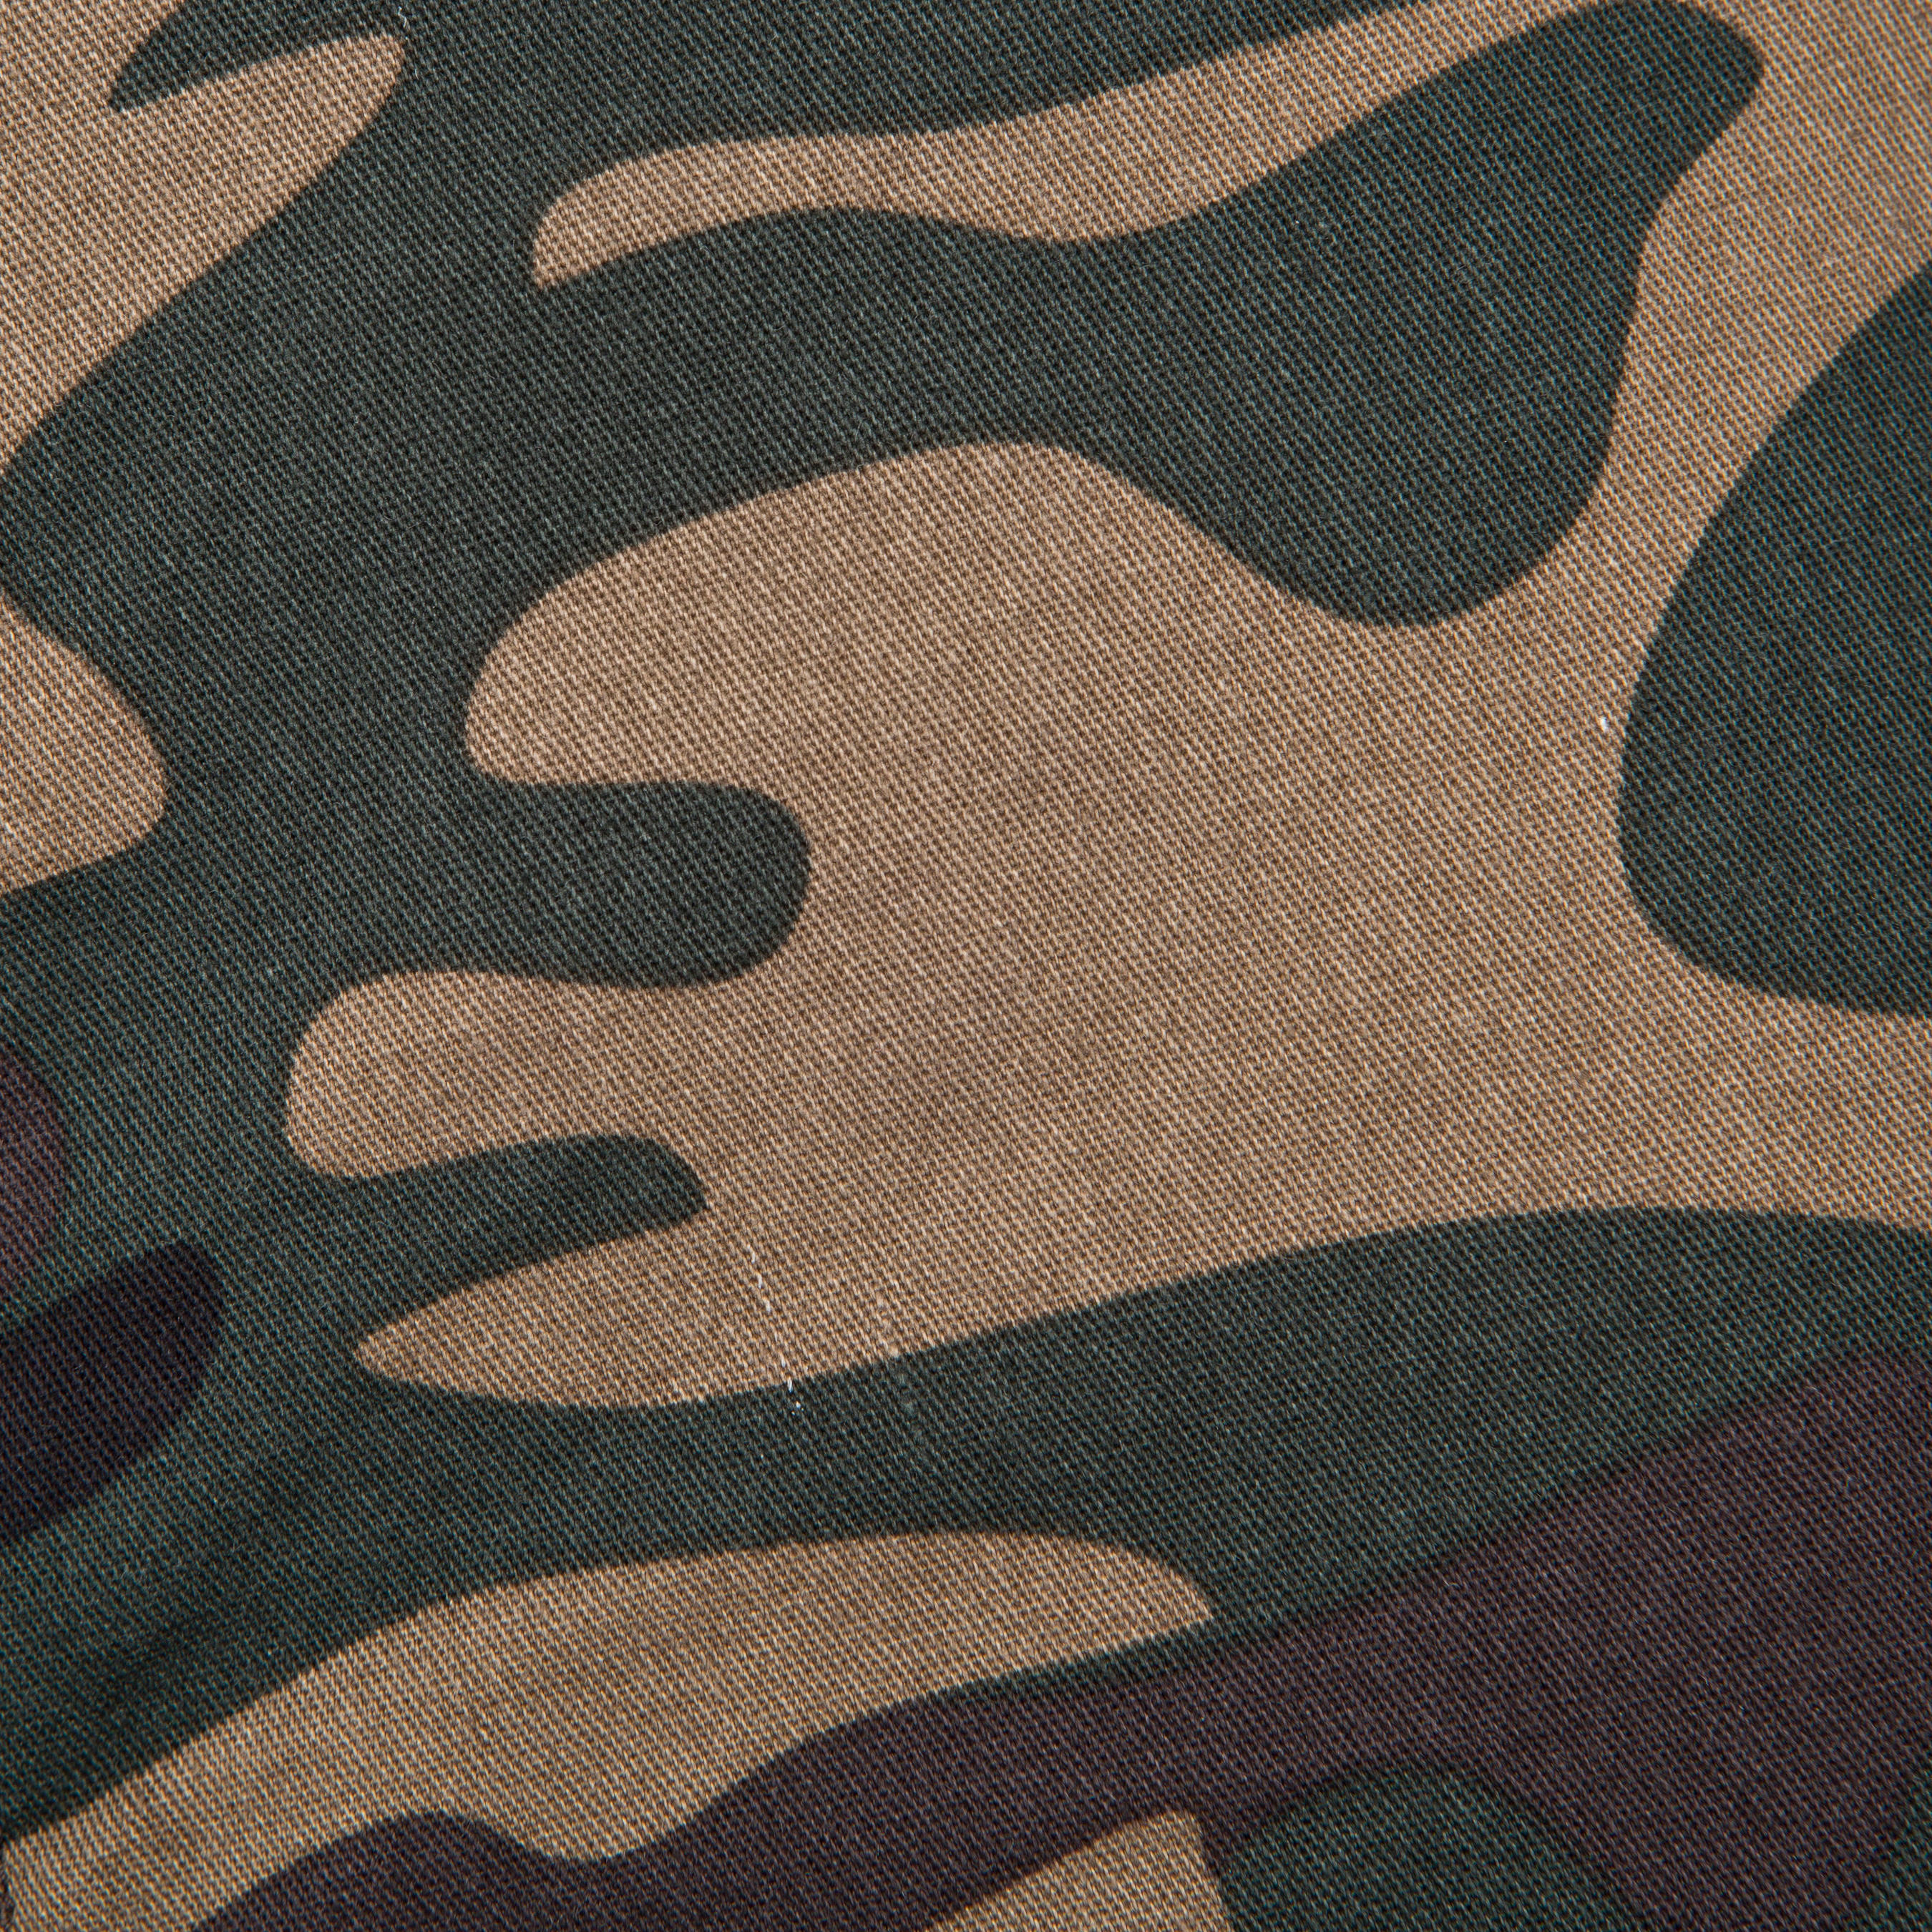 decathlon camouflage pants